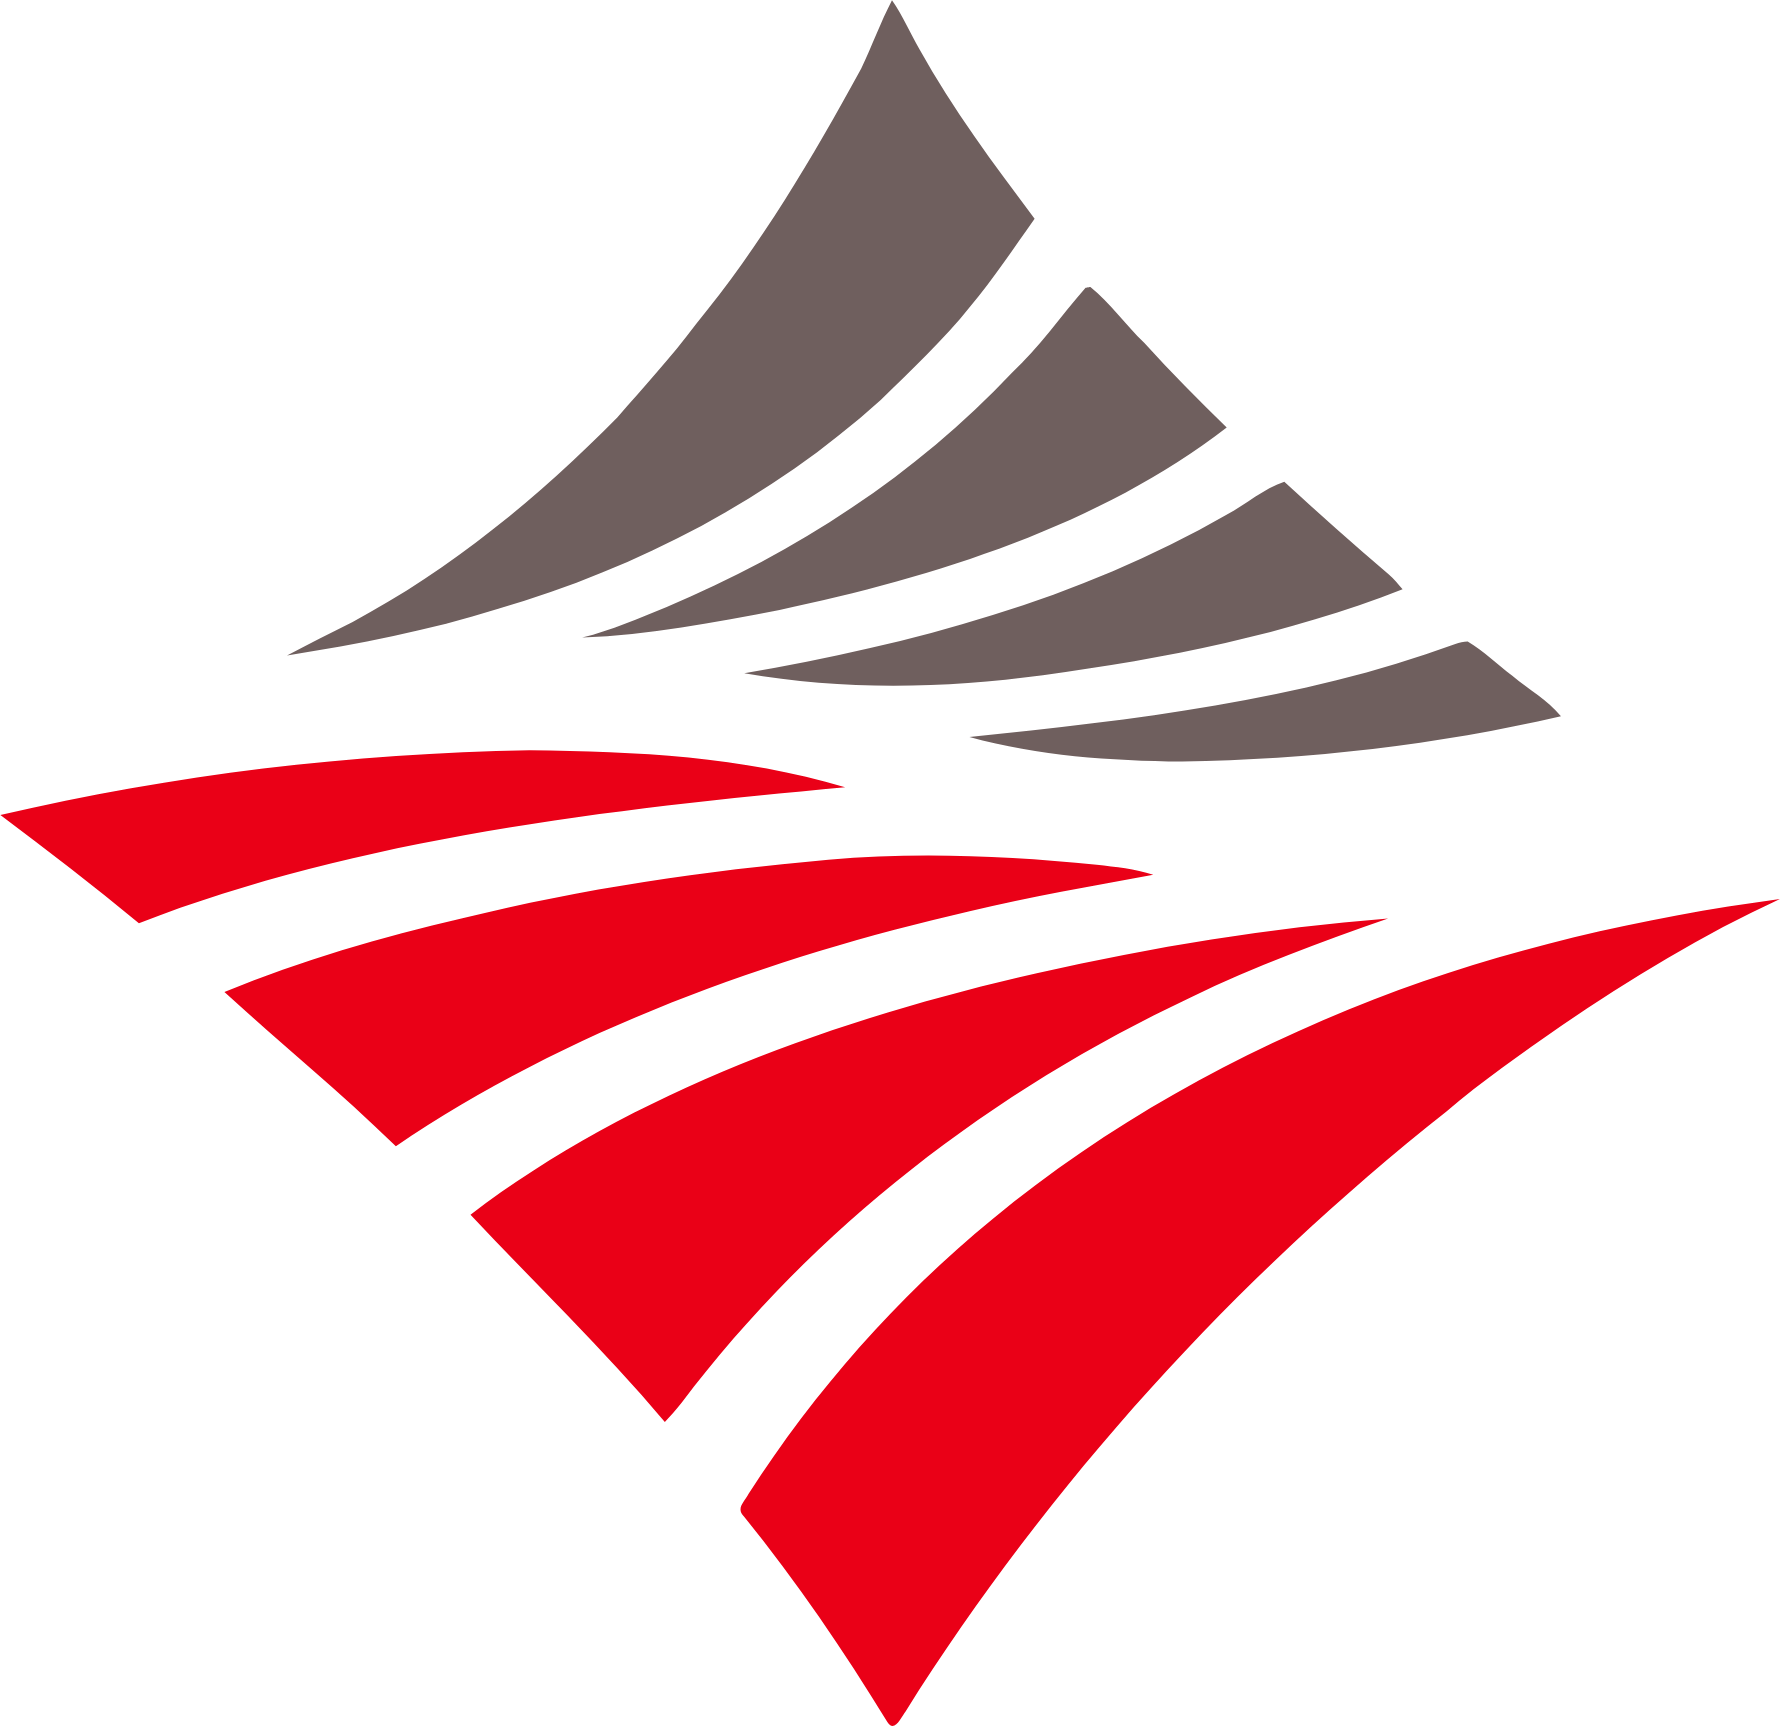 Frasers Logistics & Industrial Trust Logo (transparentes PNG)